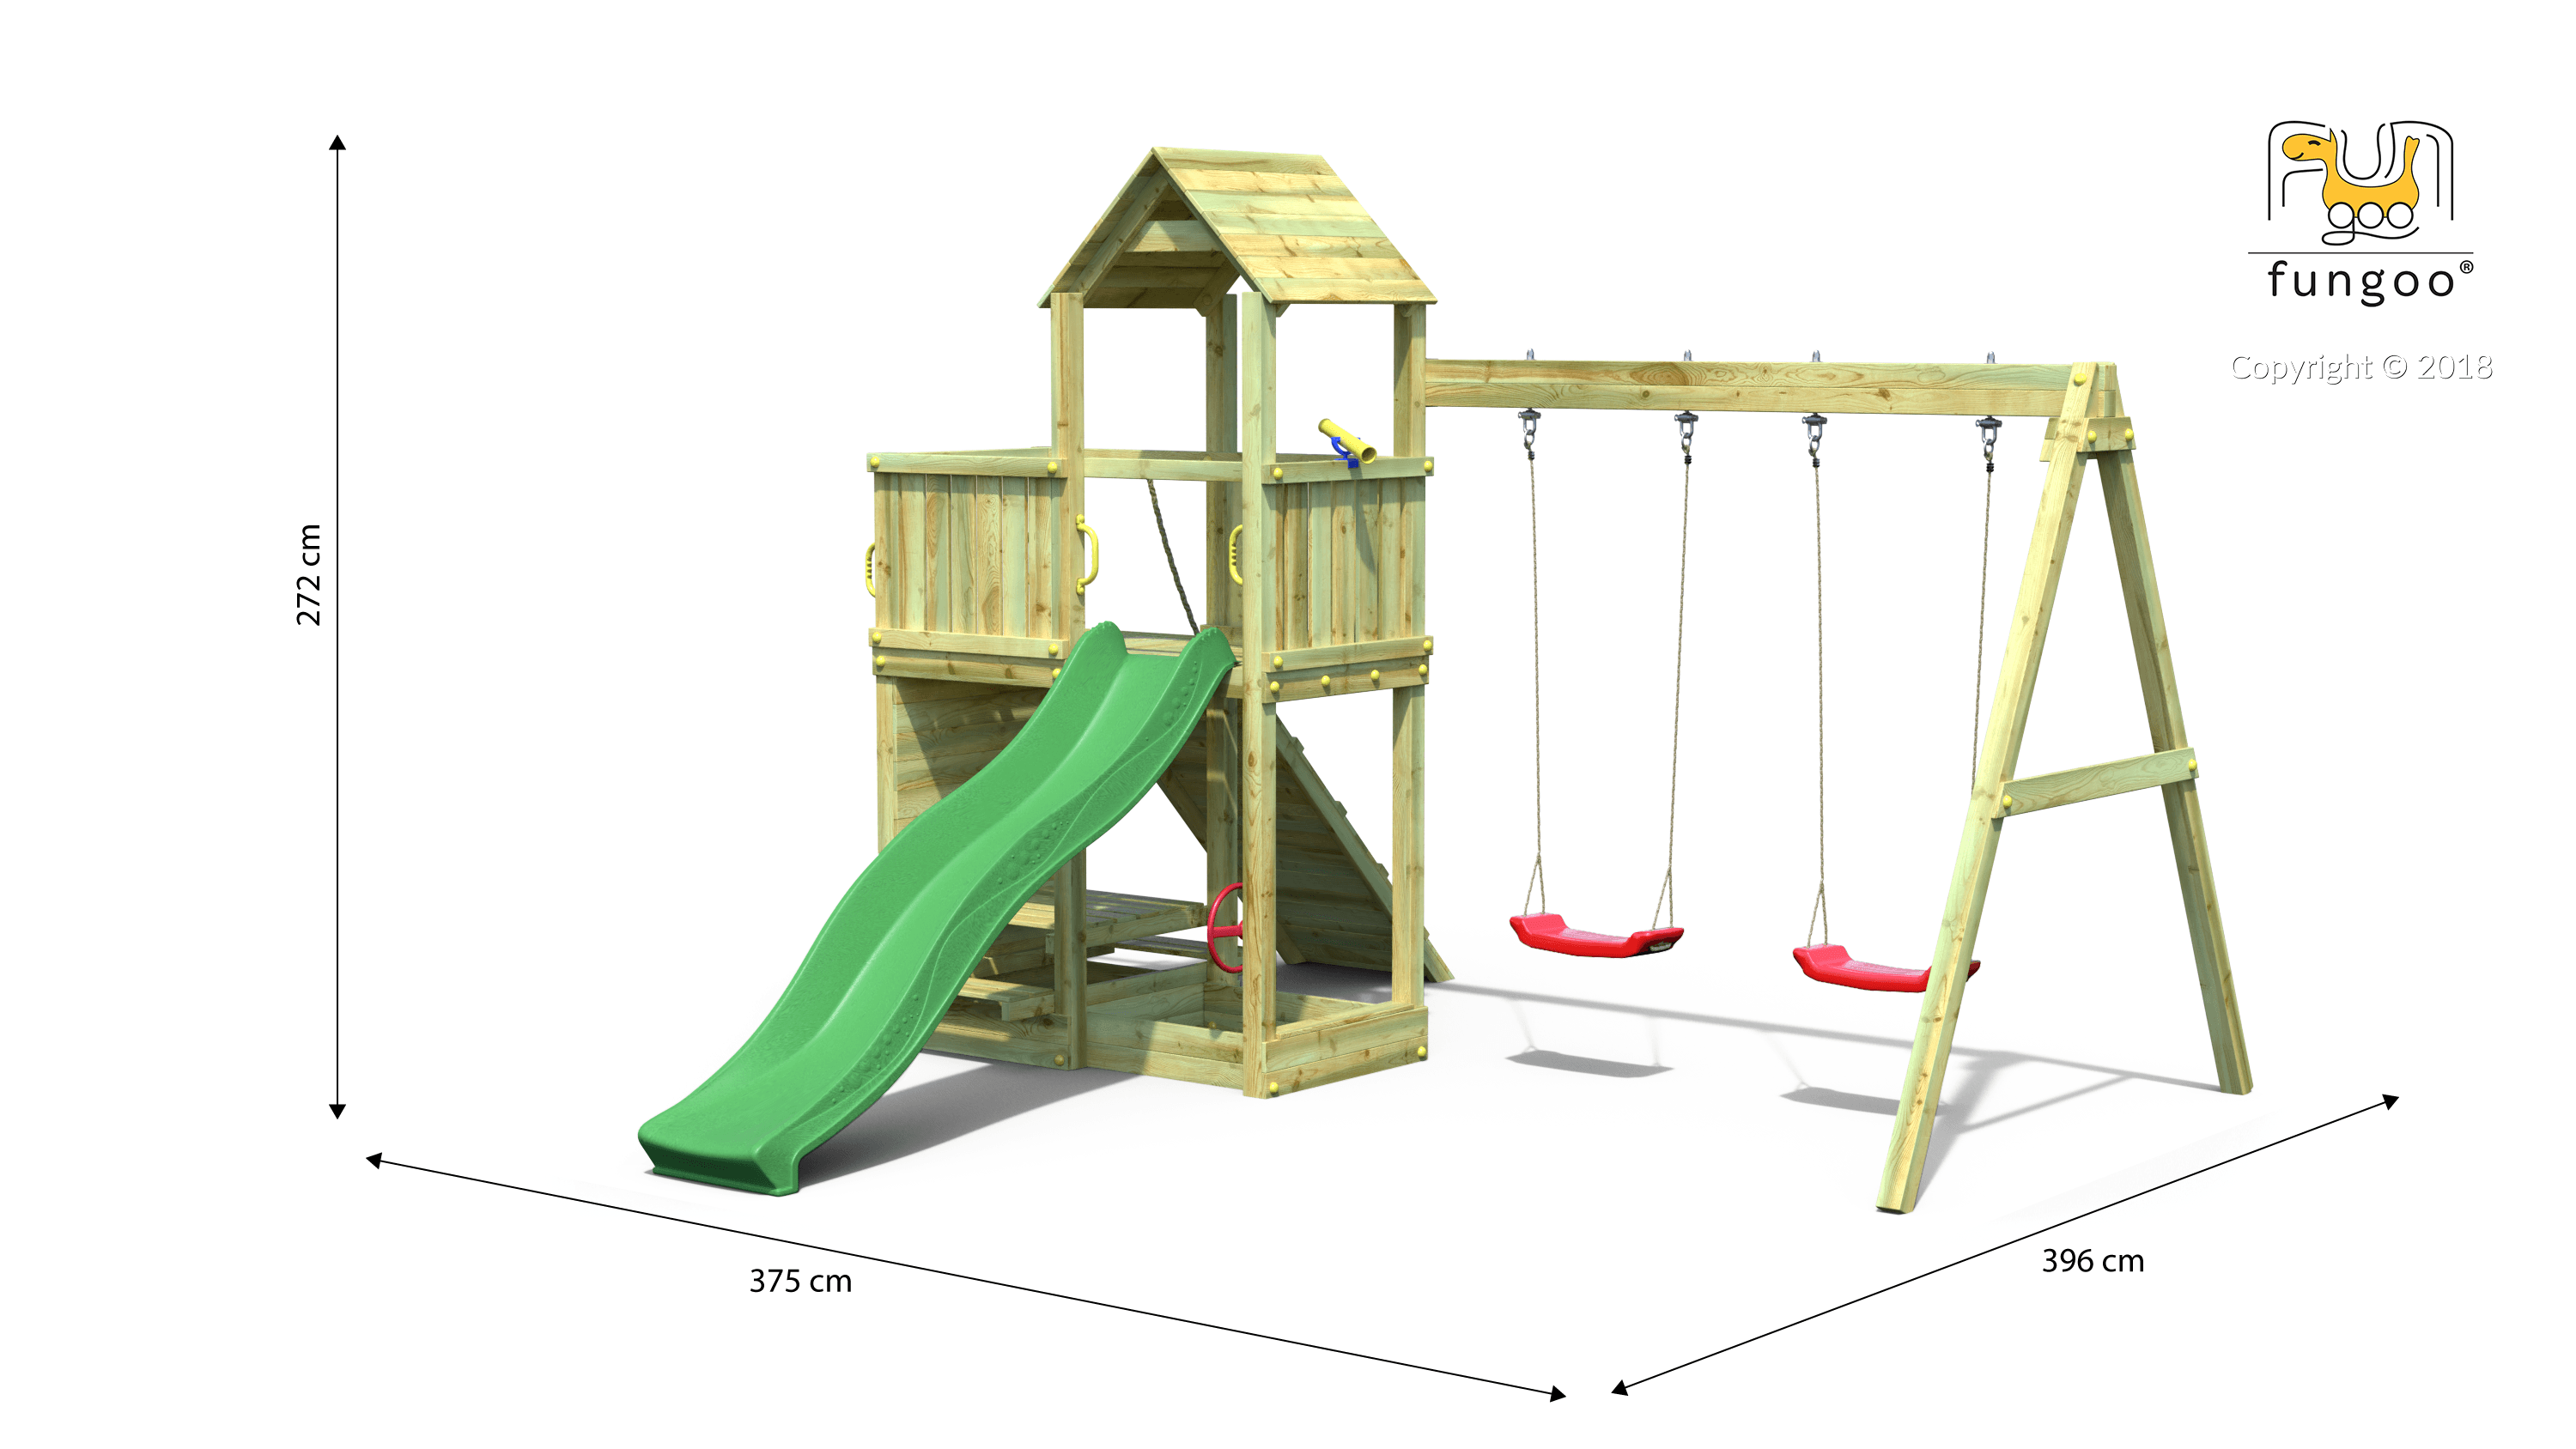 Fungoo - Fungoo Floppi KDI Green Slide Playground - Mari Kali Stores Cyprus